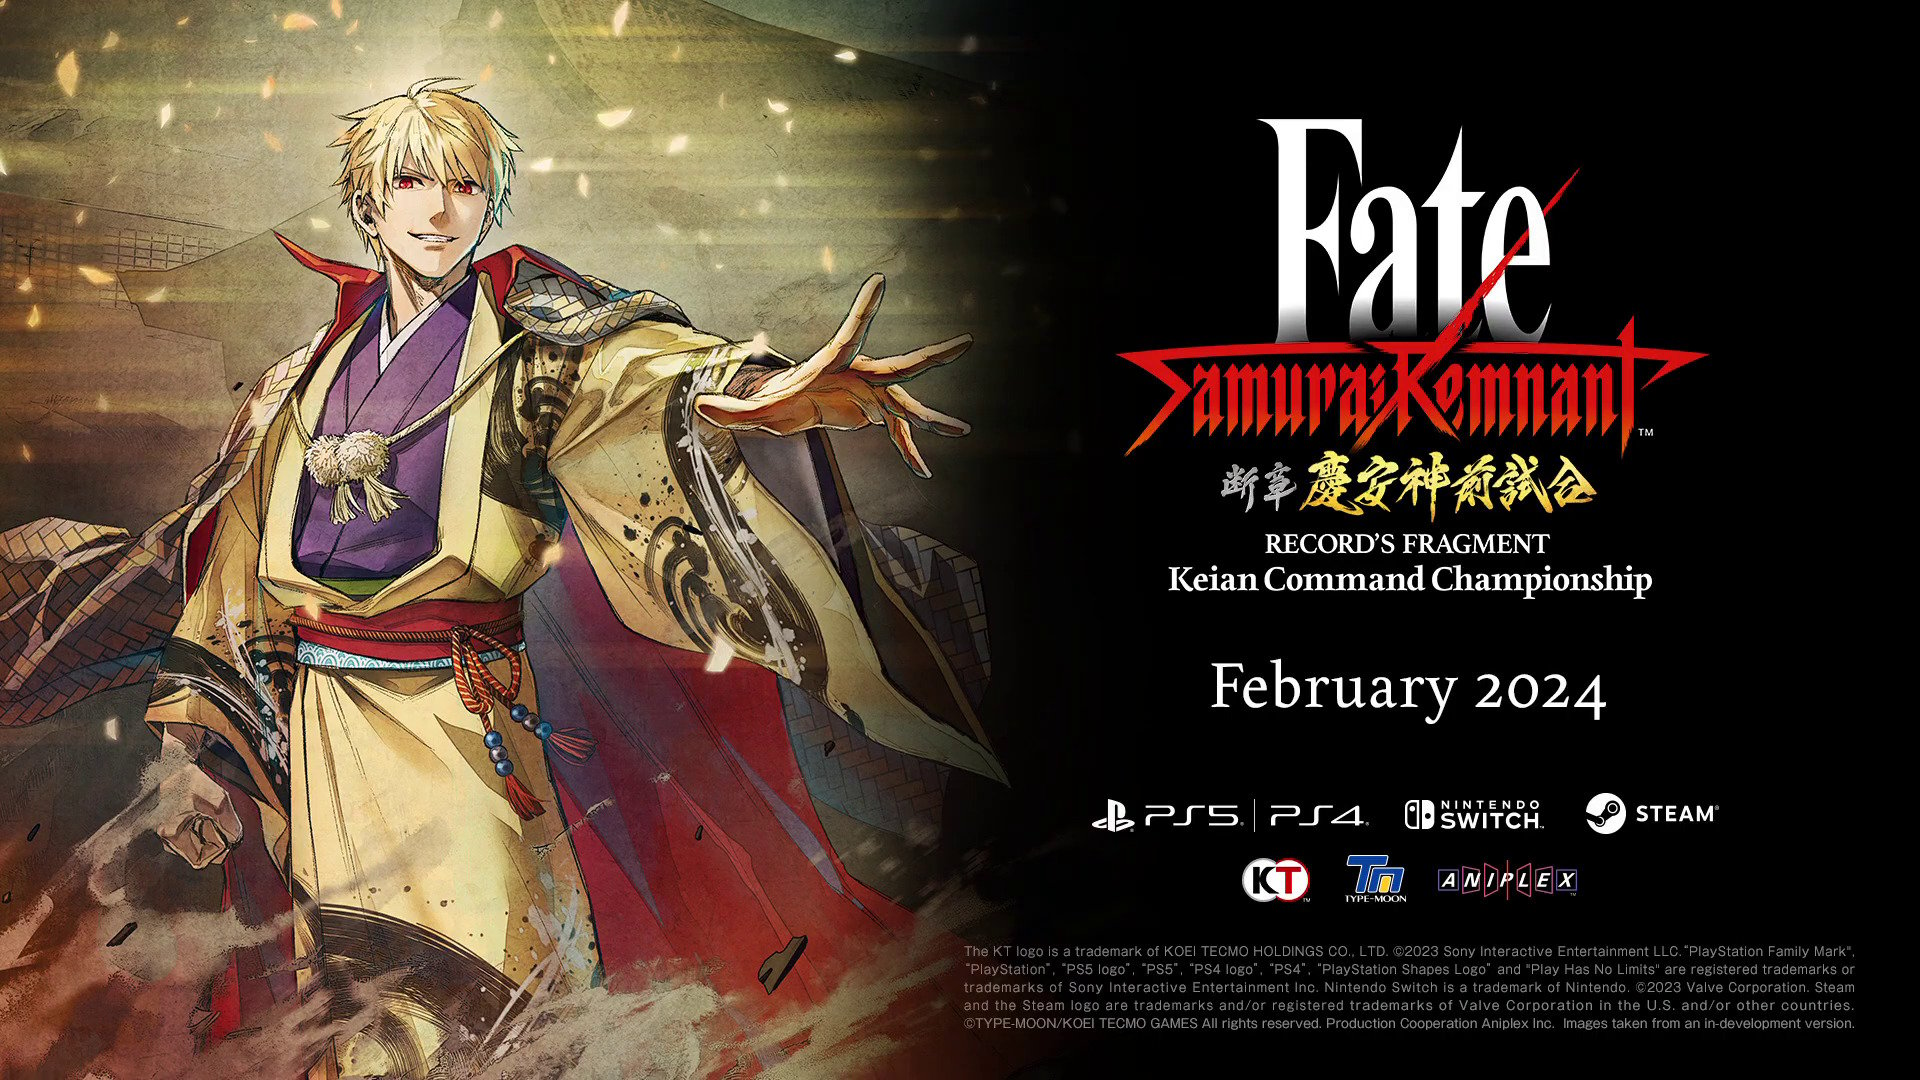 Fate/Samurai Remnant DLC 'Record's Fragment: Keian Command Championship'  launches in February 2024 - Gematsu